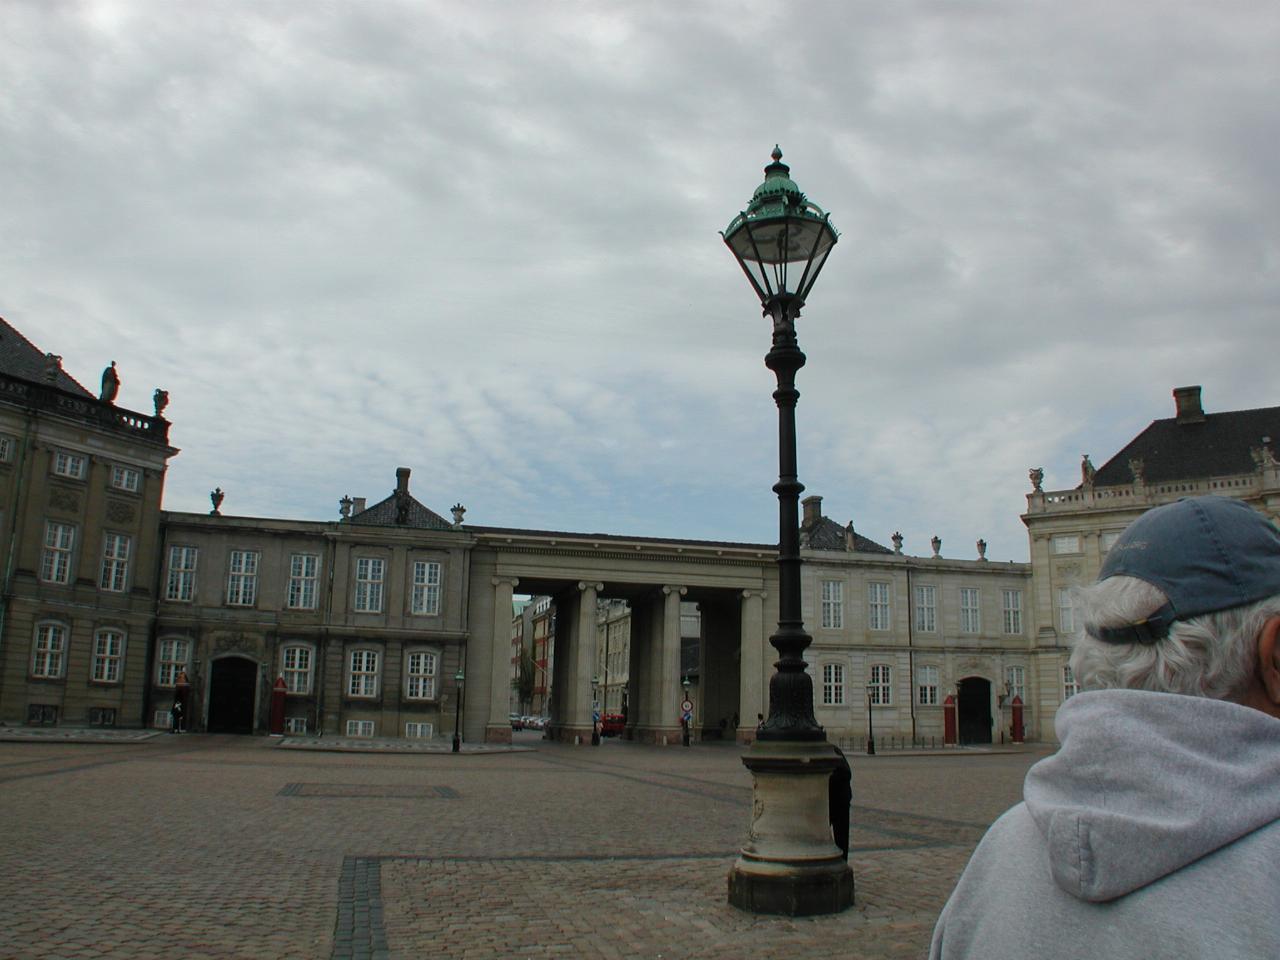 KPLU Viking Jazz: Amelienborg Plads (Plaza): Christian IX's Palace (panorama 4/4)